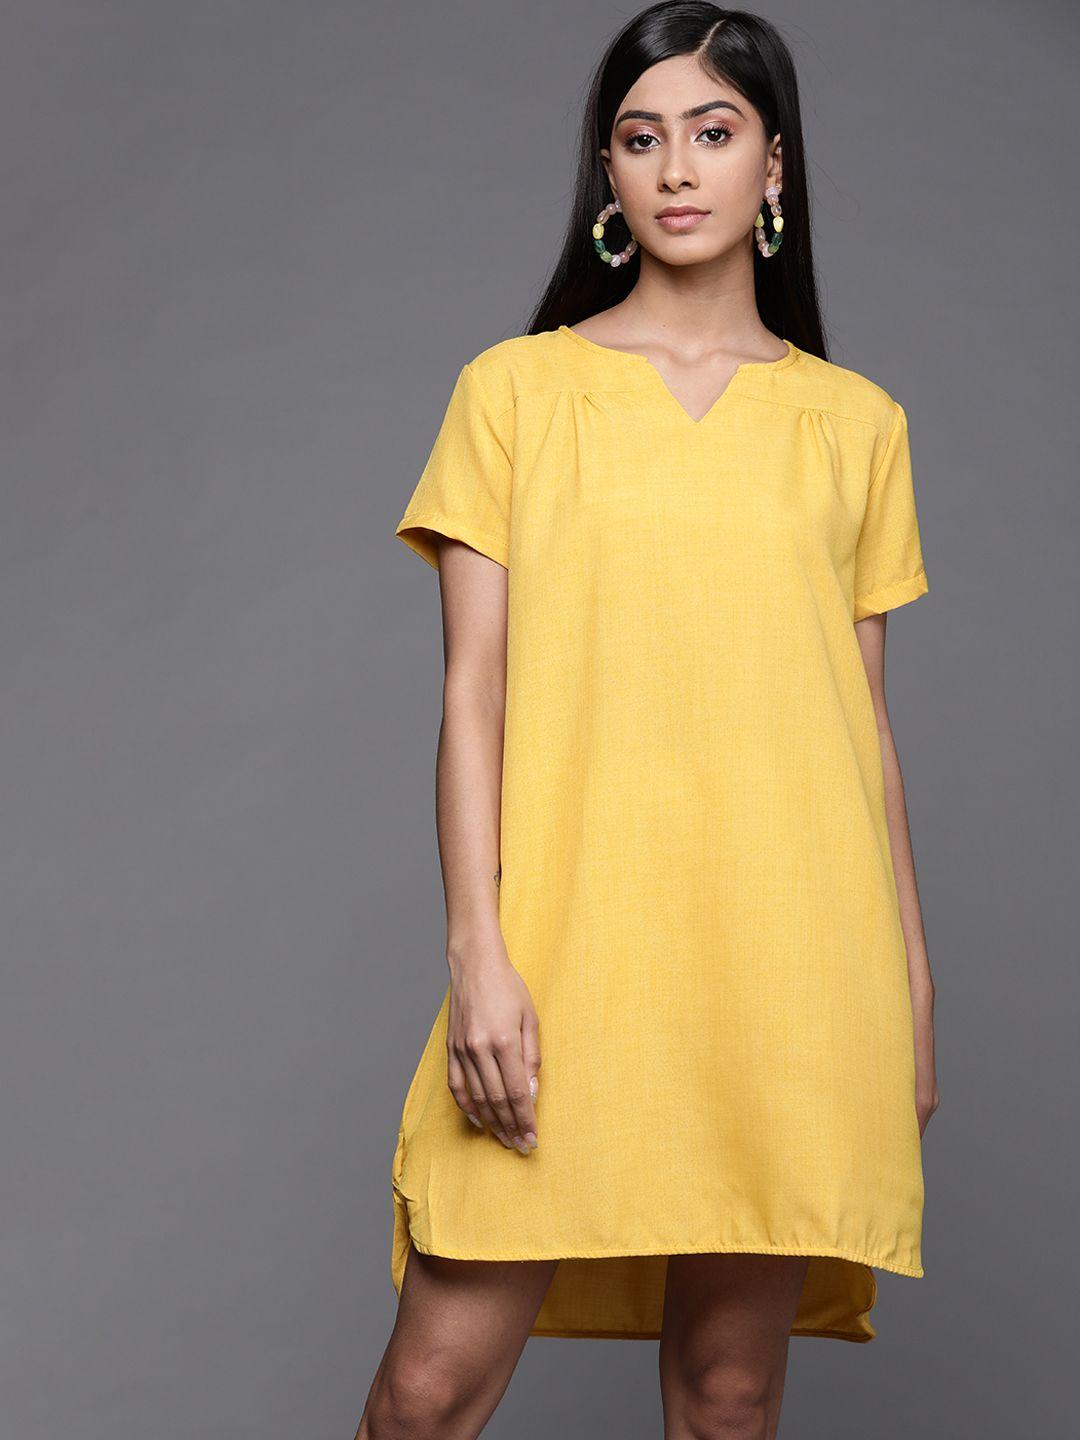 jc mode women yellow solid high-low t-shirt dress